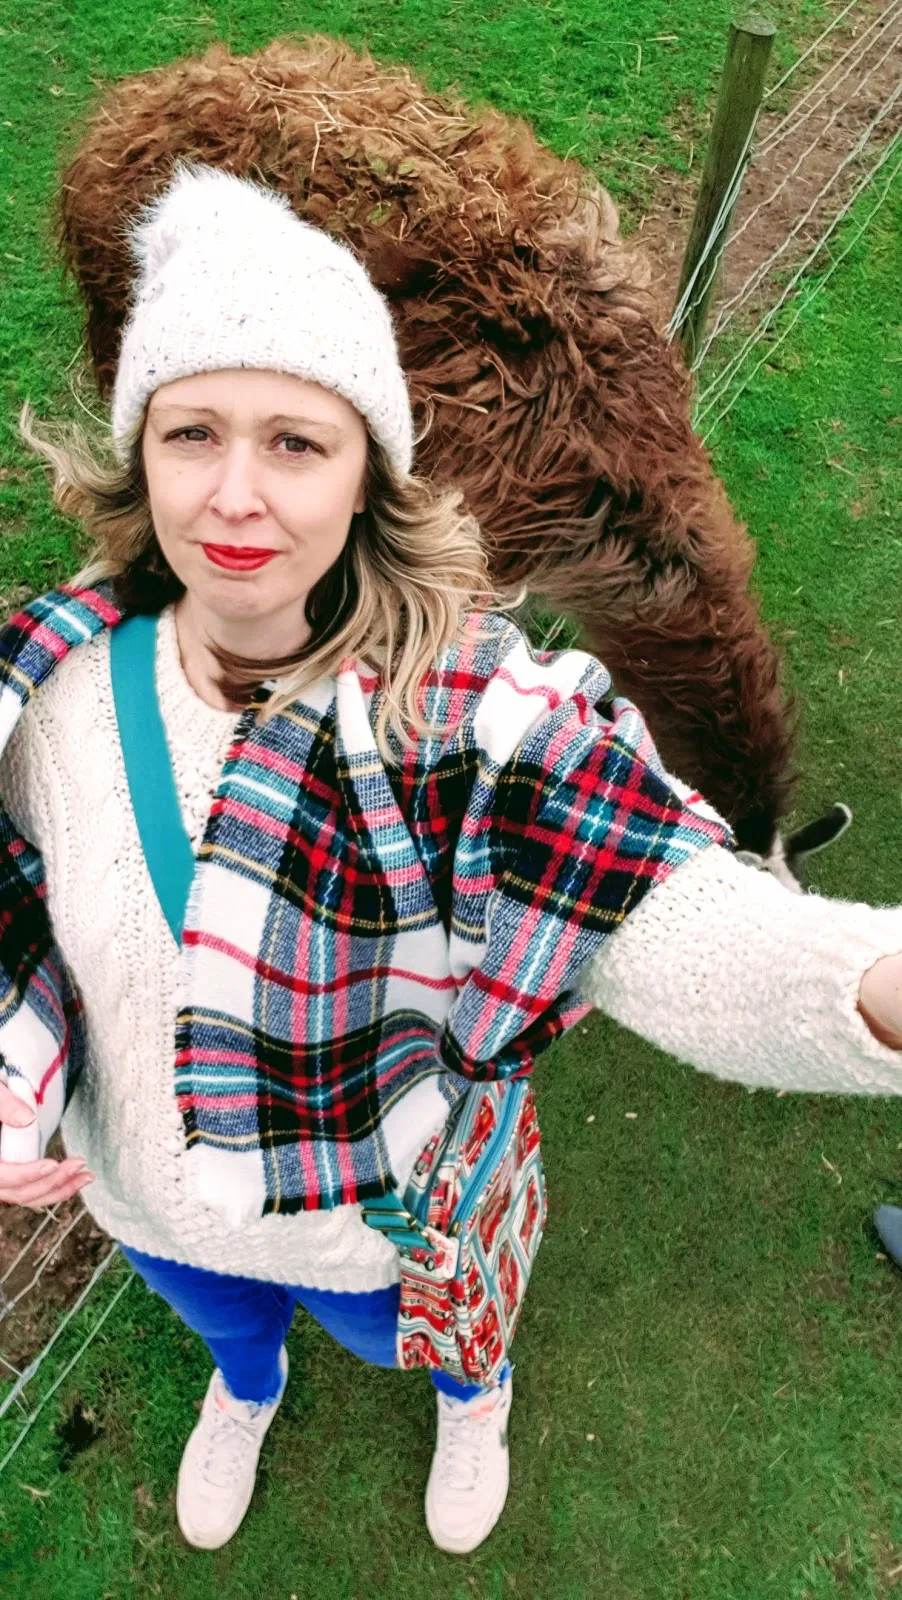 Selfie with a Brown llama